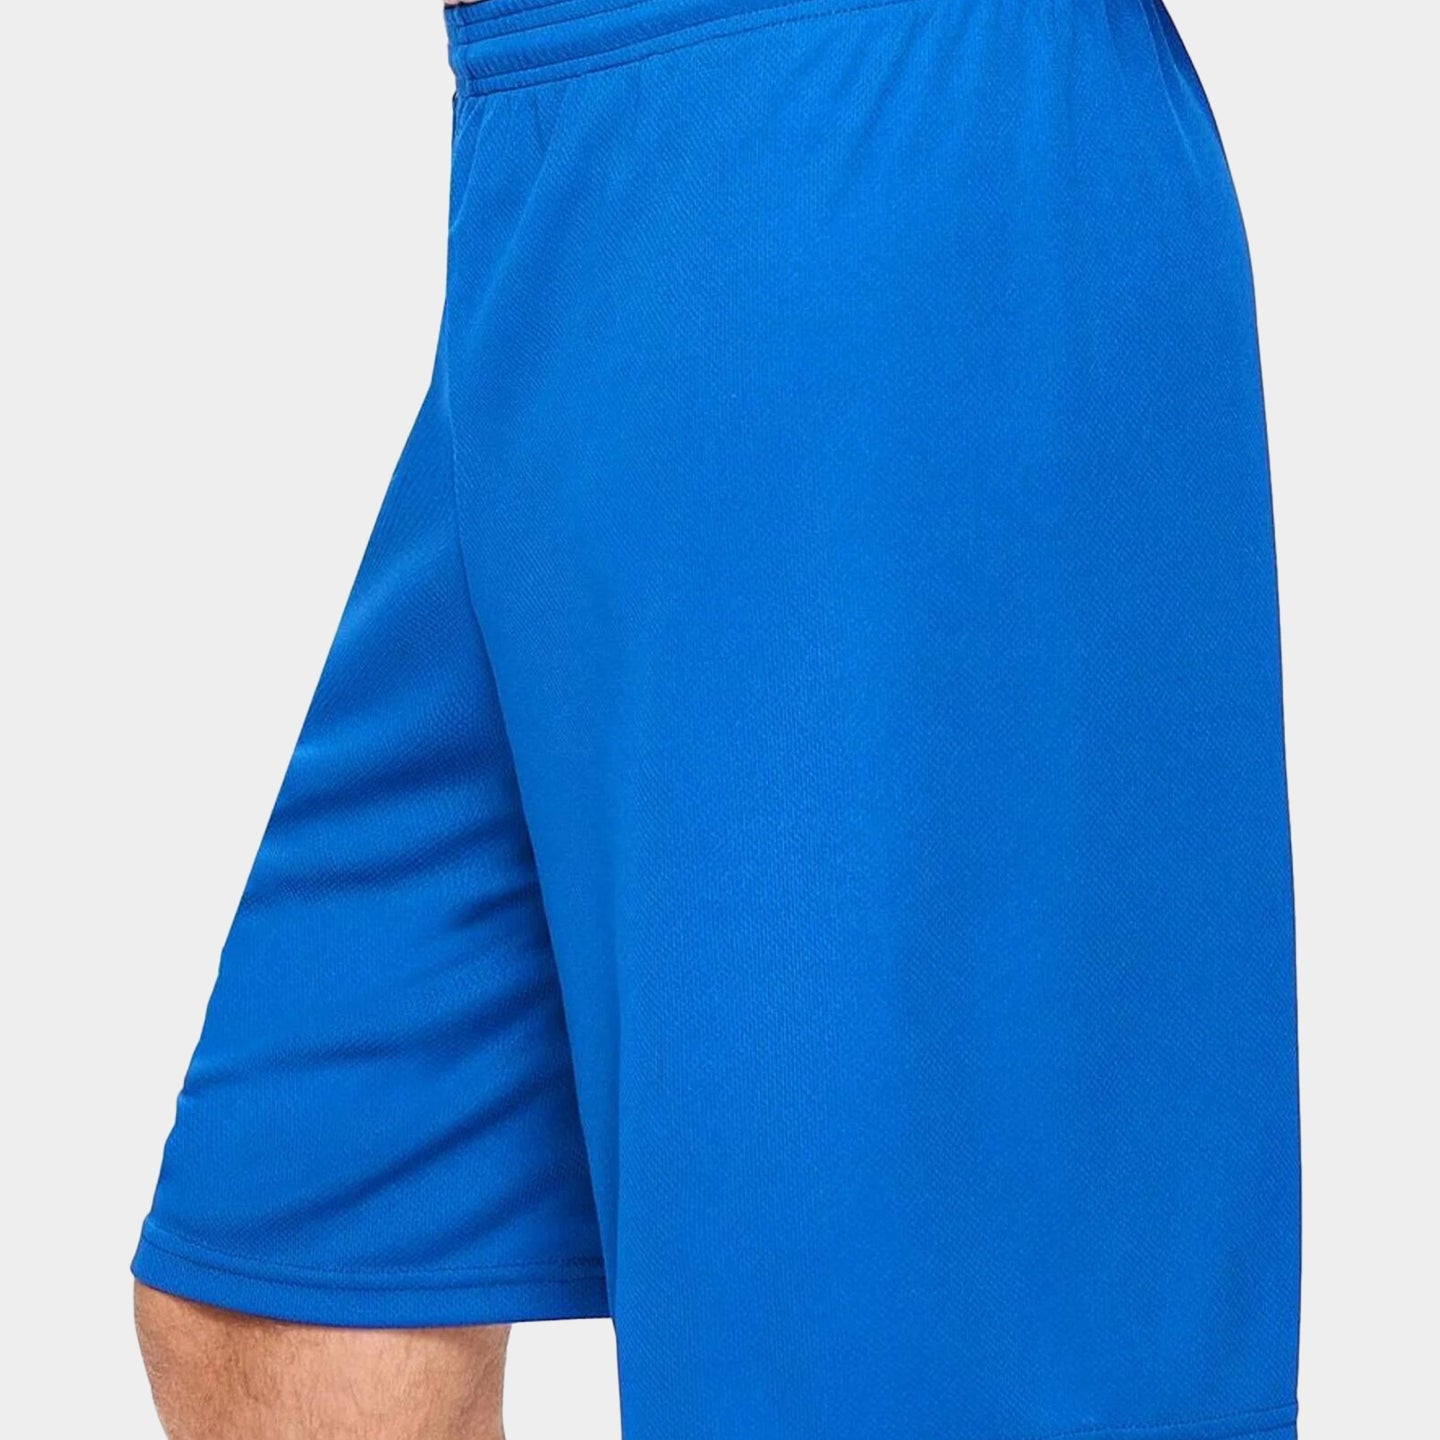 Expert Brand Oxymesh Men's Performance Training Shorts, 2XL, Royal Blue A1